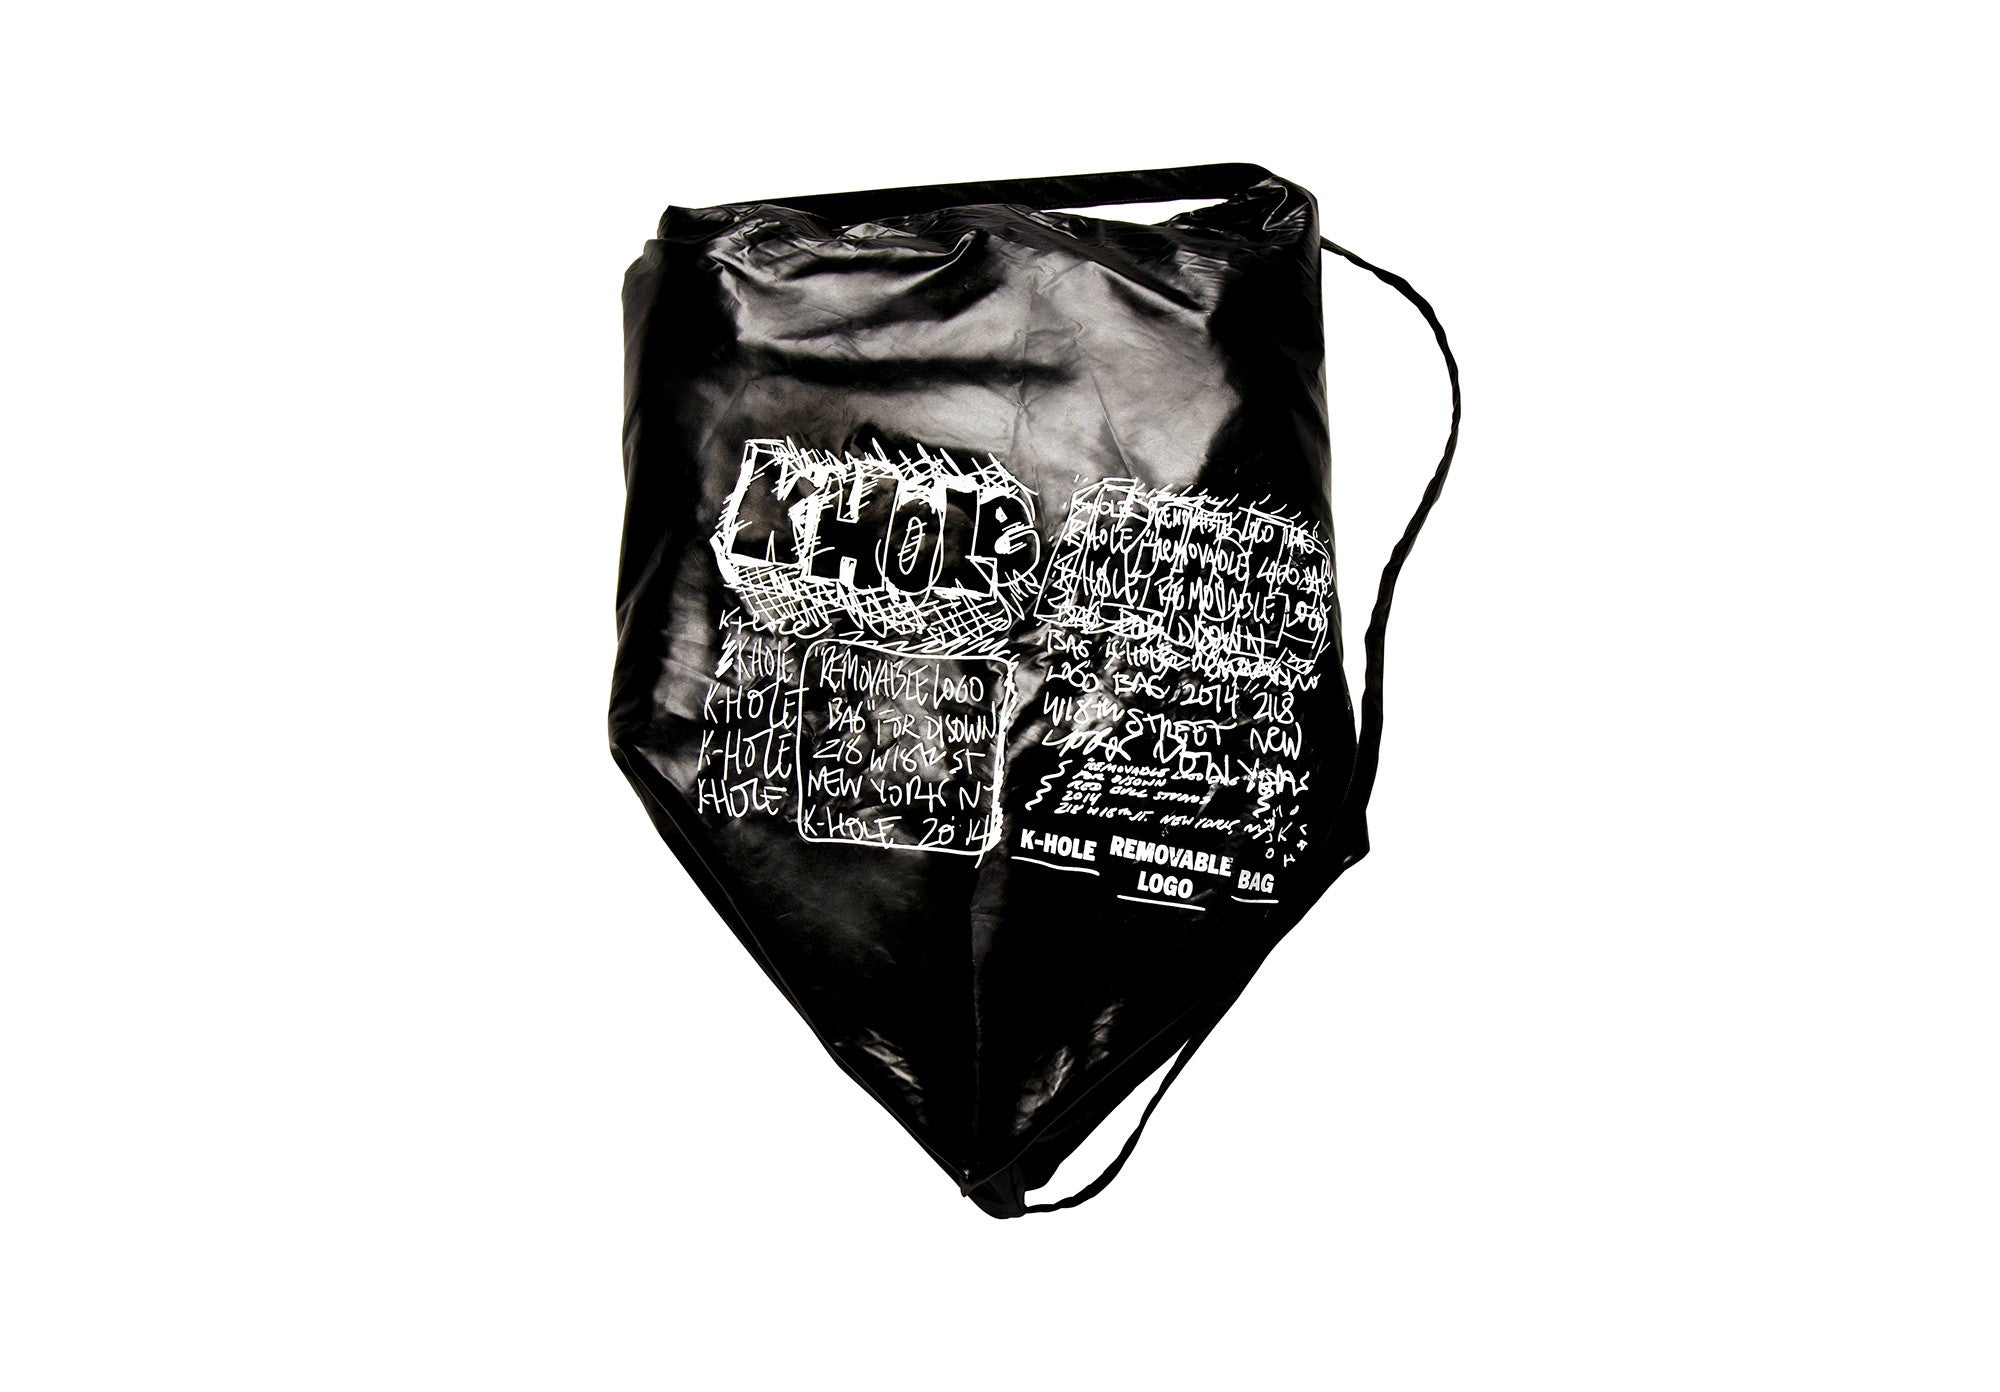 K-HOLE Removable Logo Bag